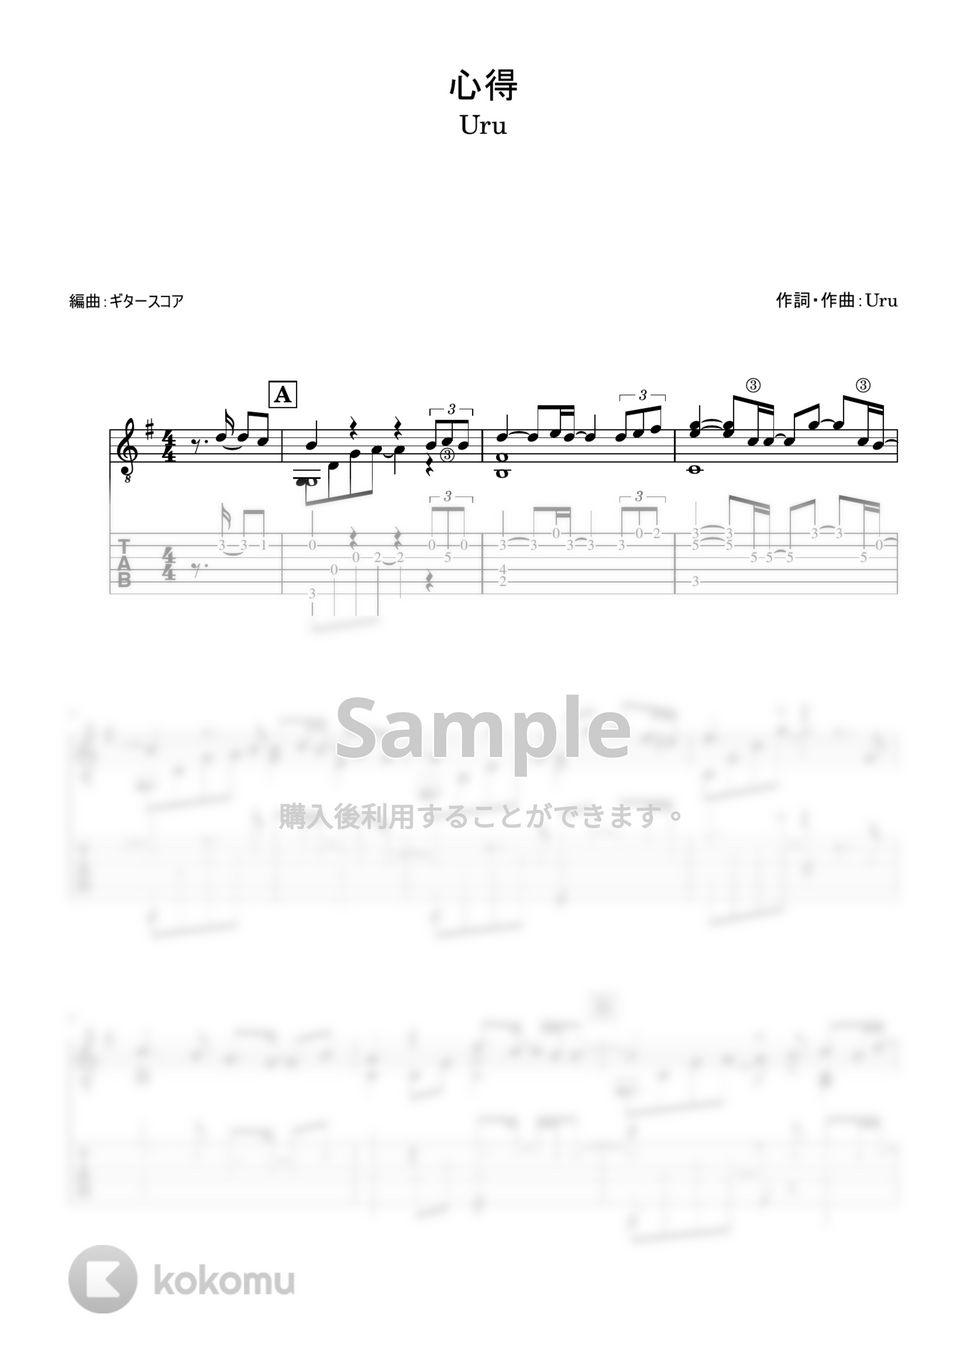 Uru - 心得 (ギターソロ用・Tab付き) by ギタースコア